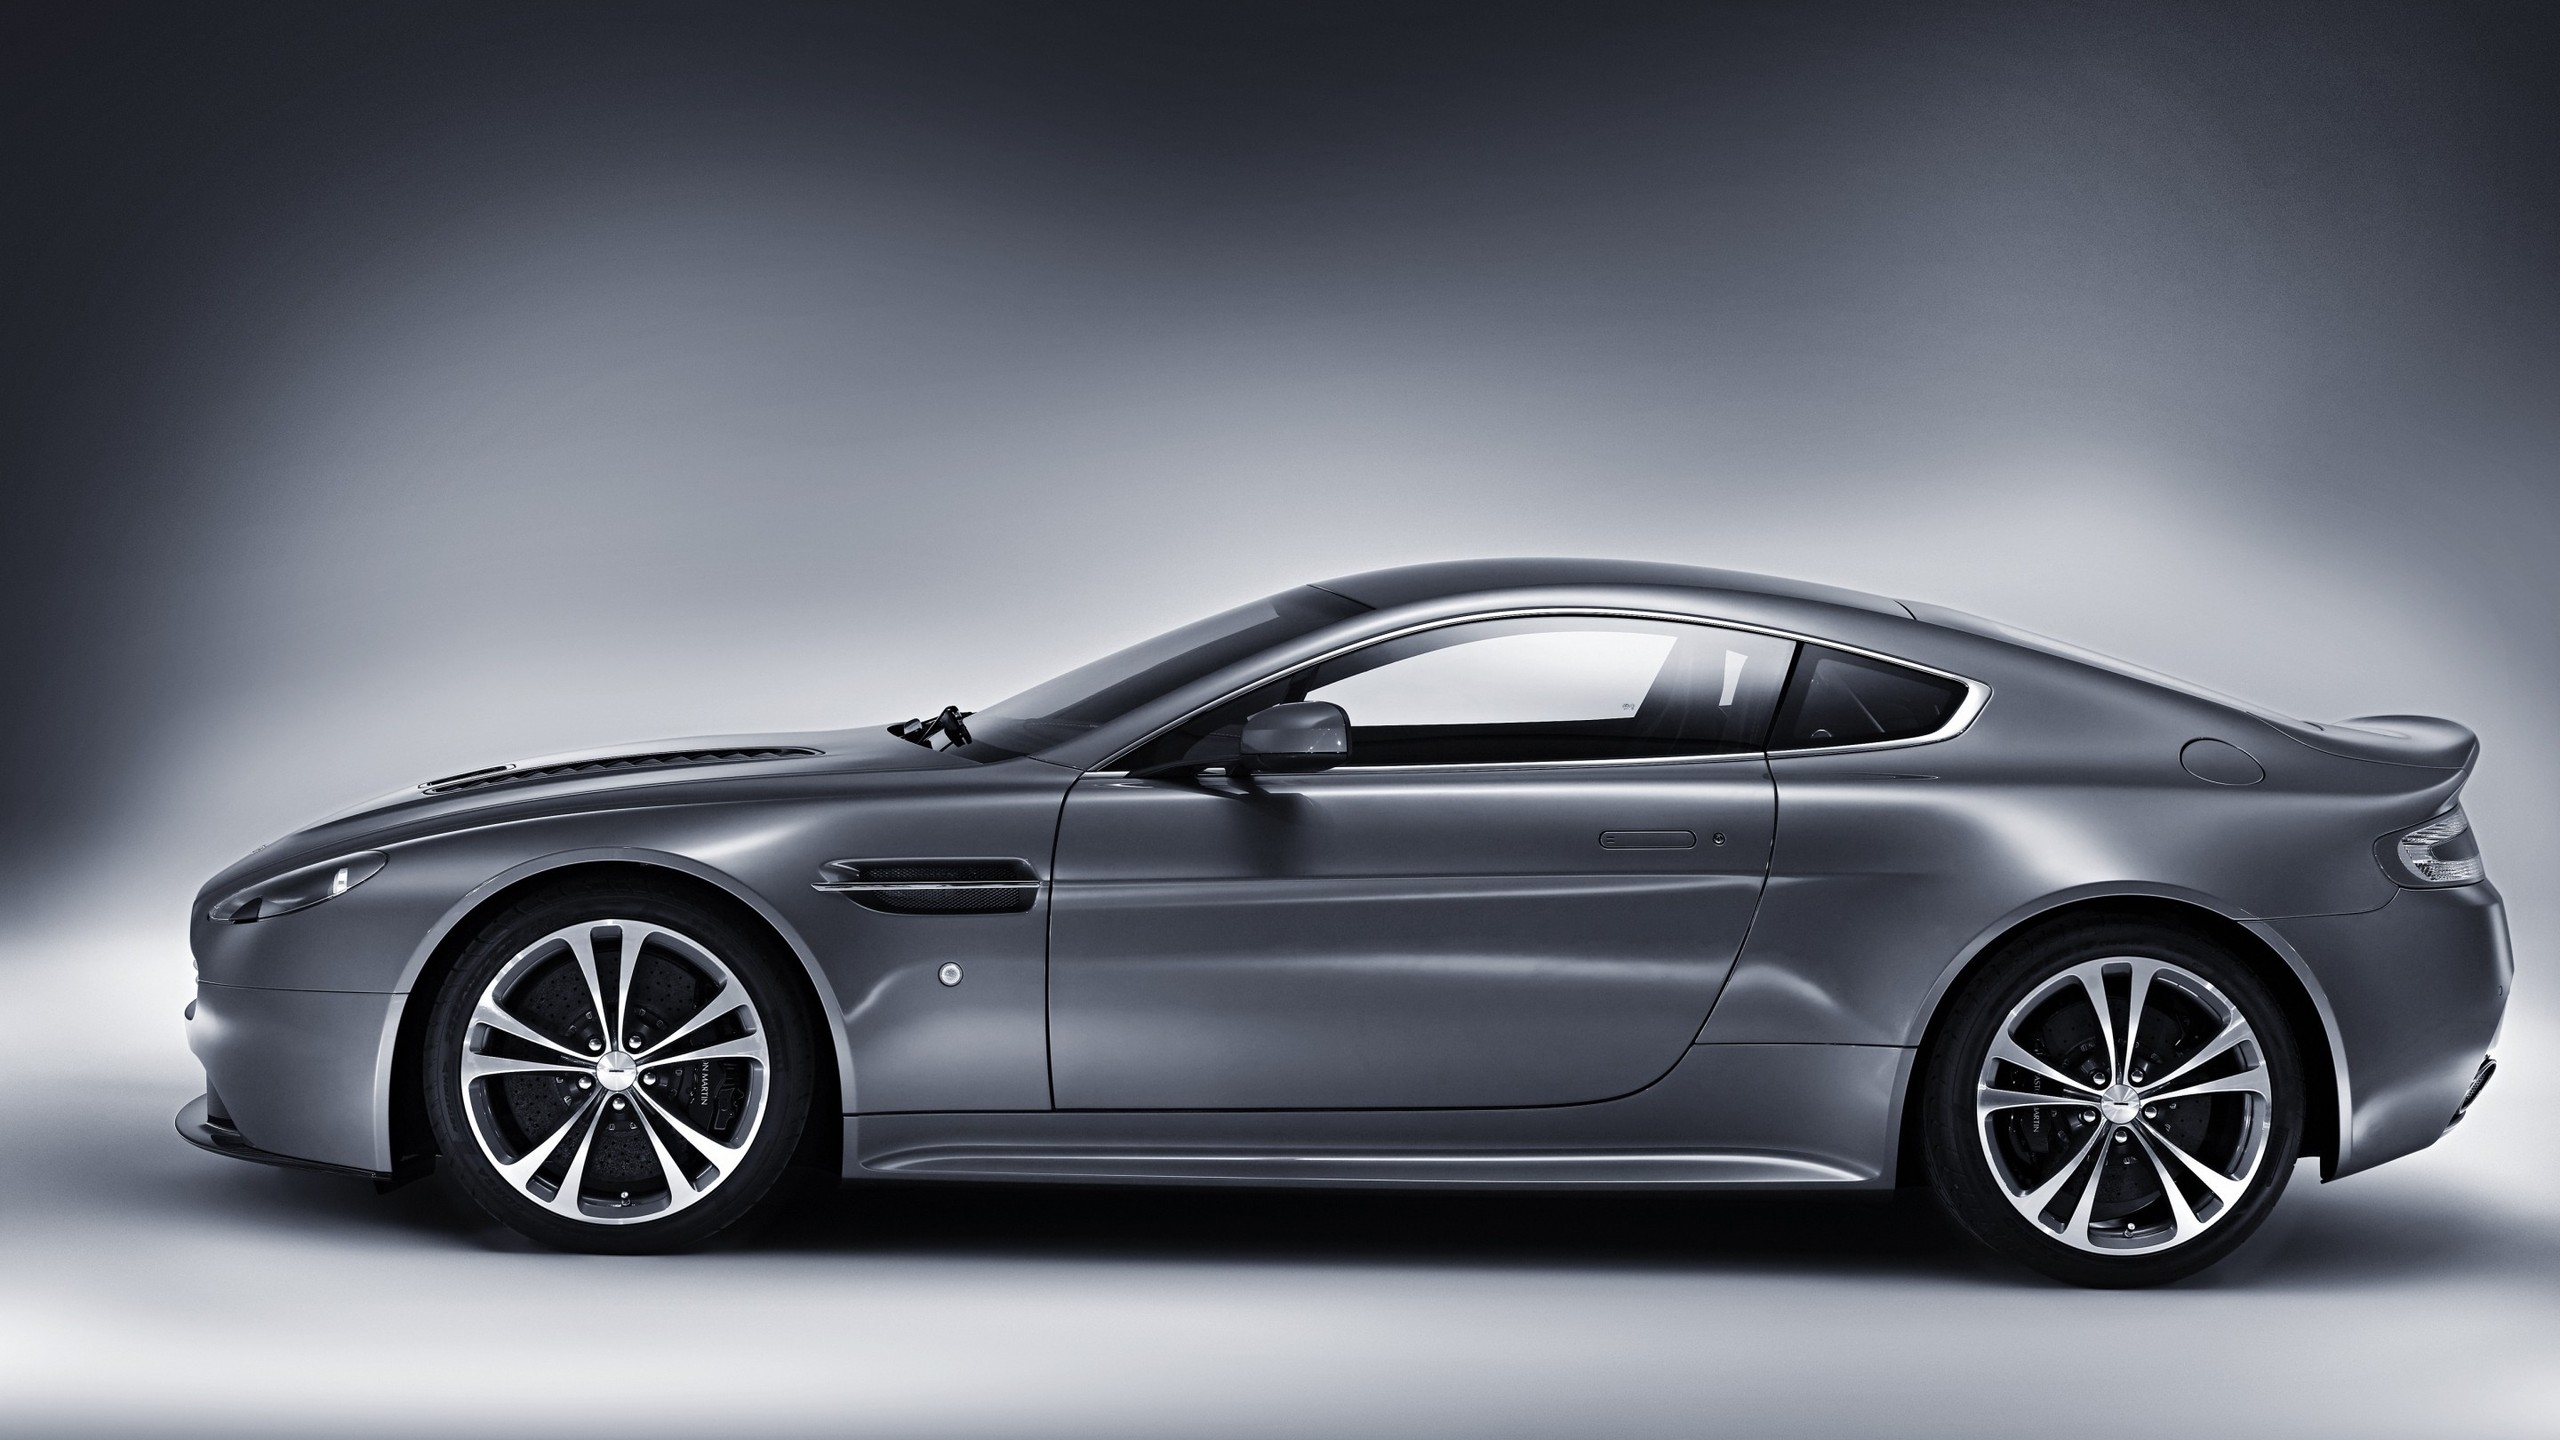 Aston Martin V12 Vantage Front View for 2560x1440 HDTV resolution